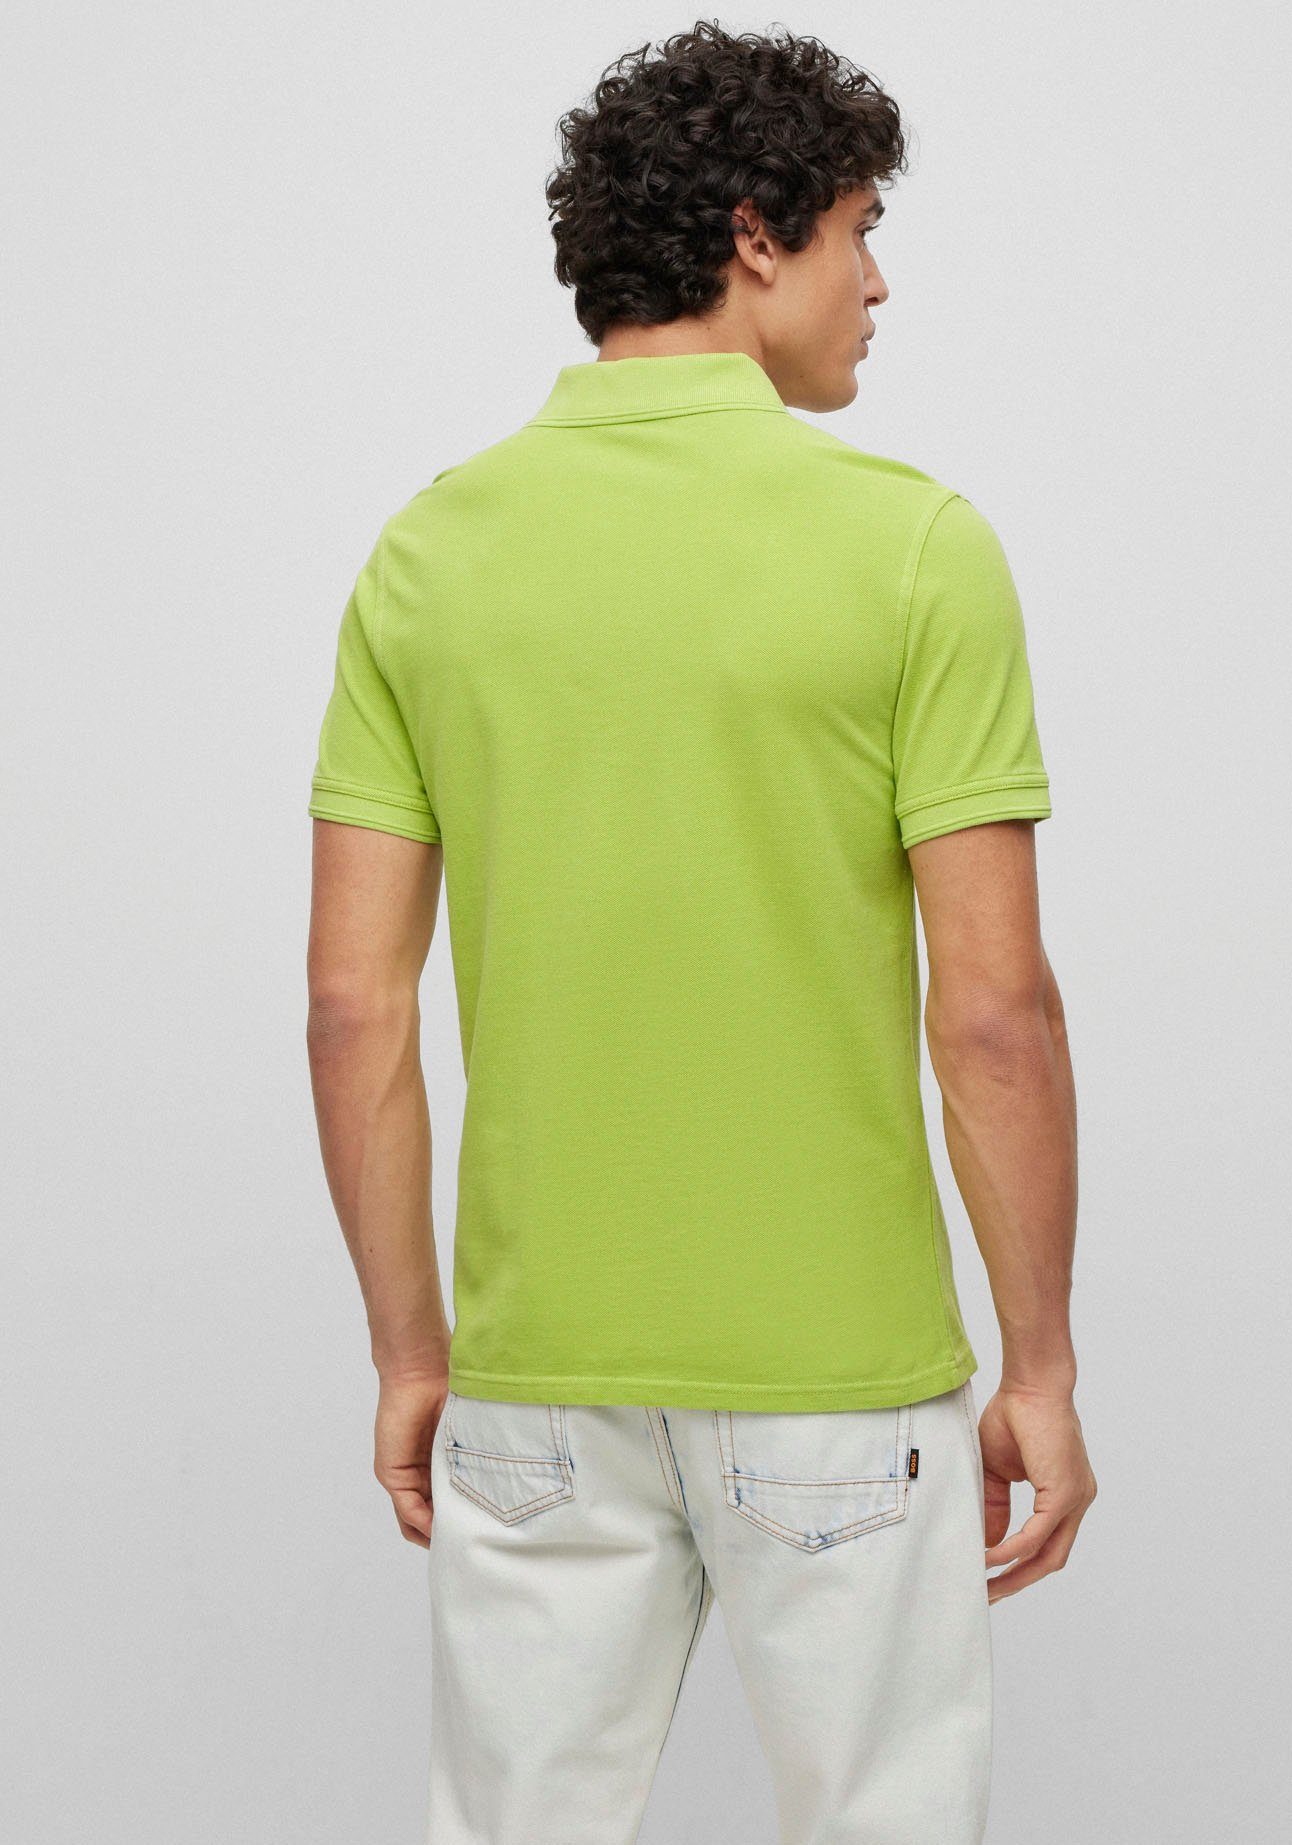 BOSS ORANGE Poloshirt am Green Logoschriftzug Bright Prime mit Brustkorb